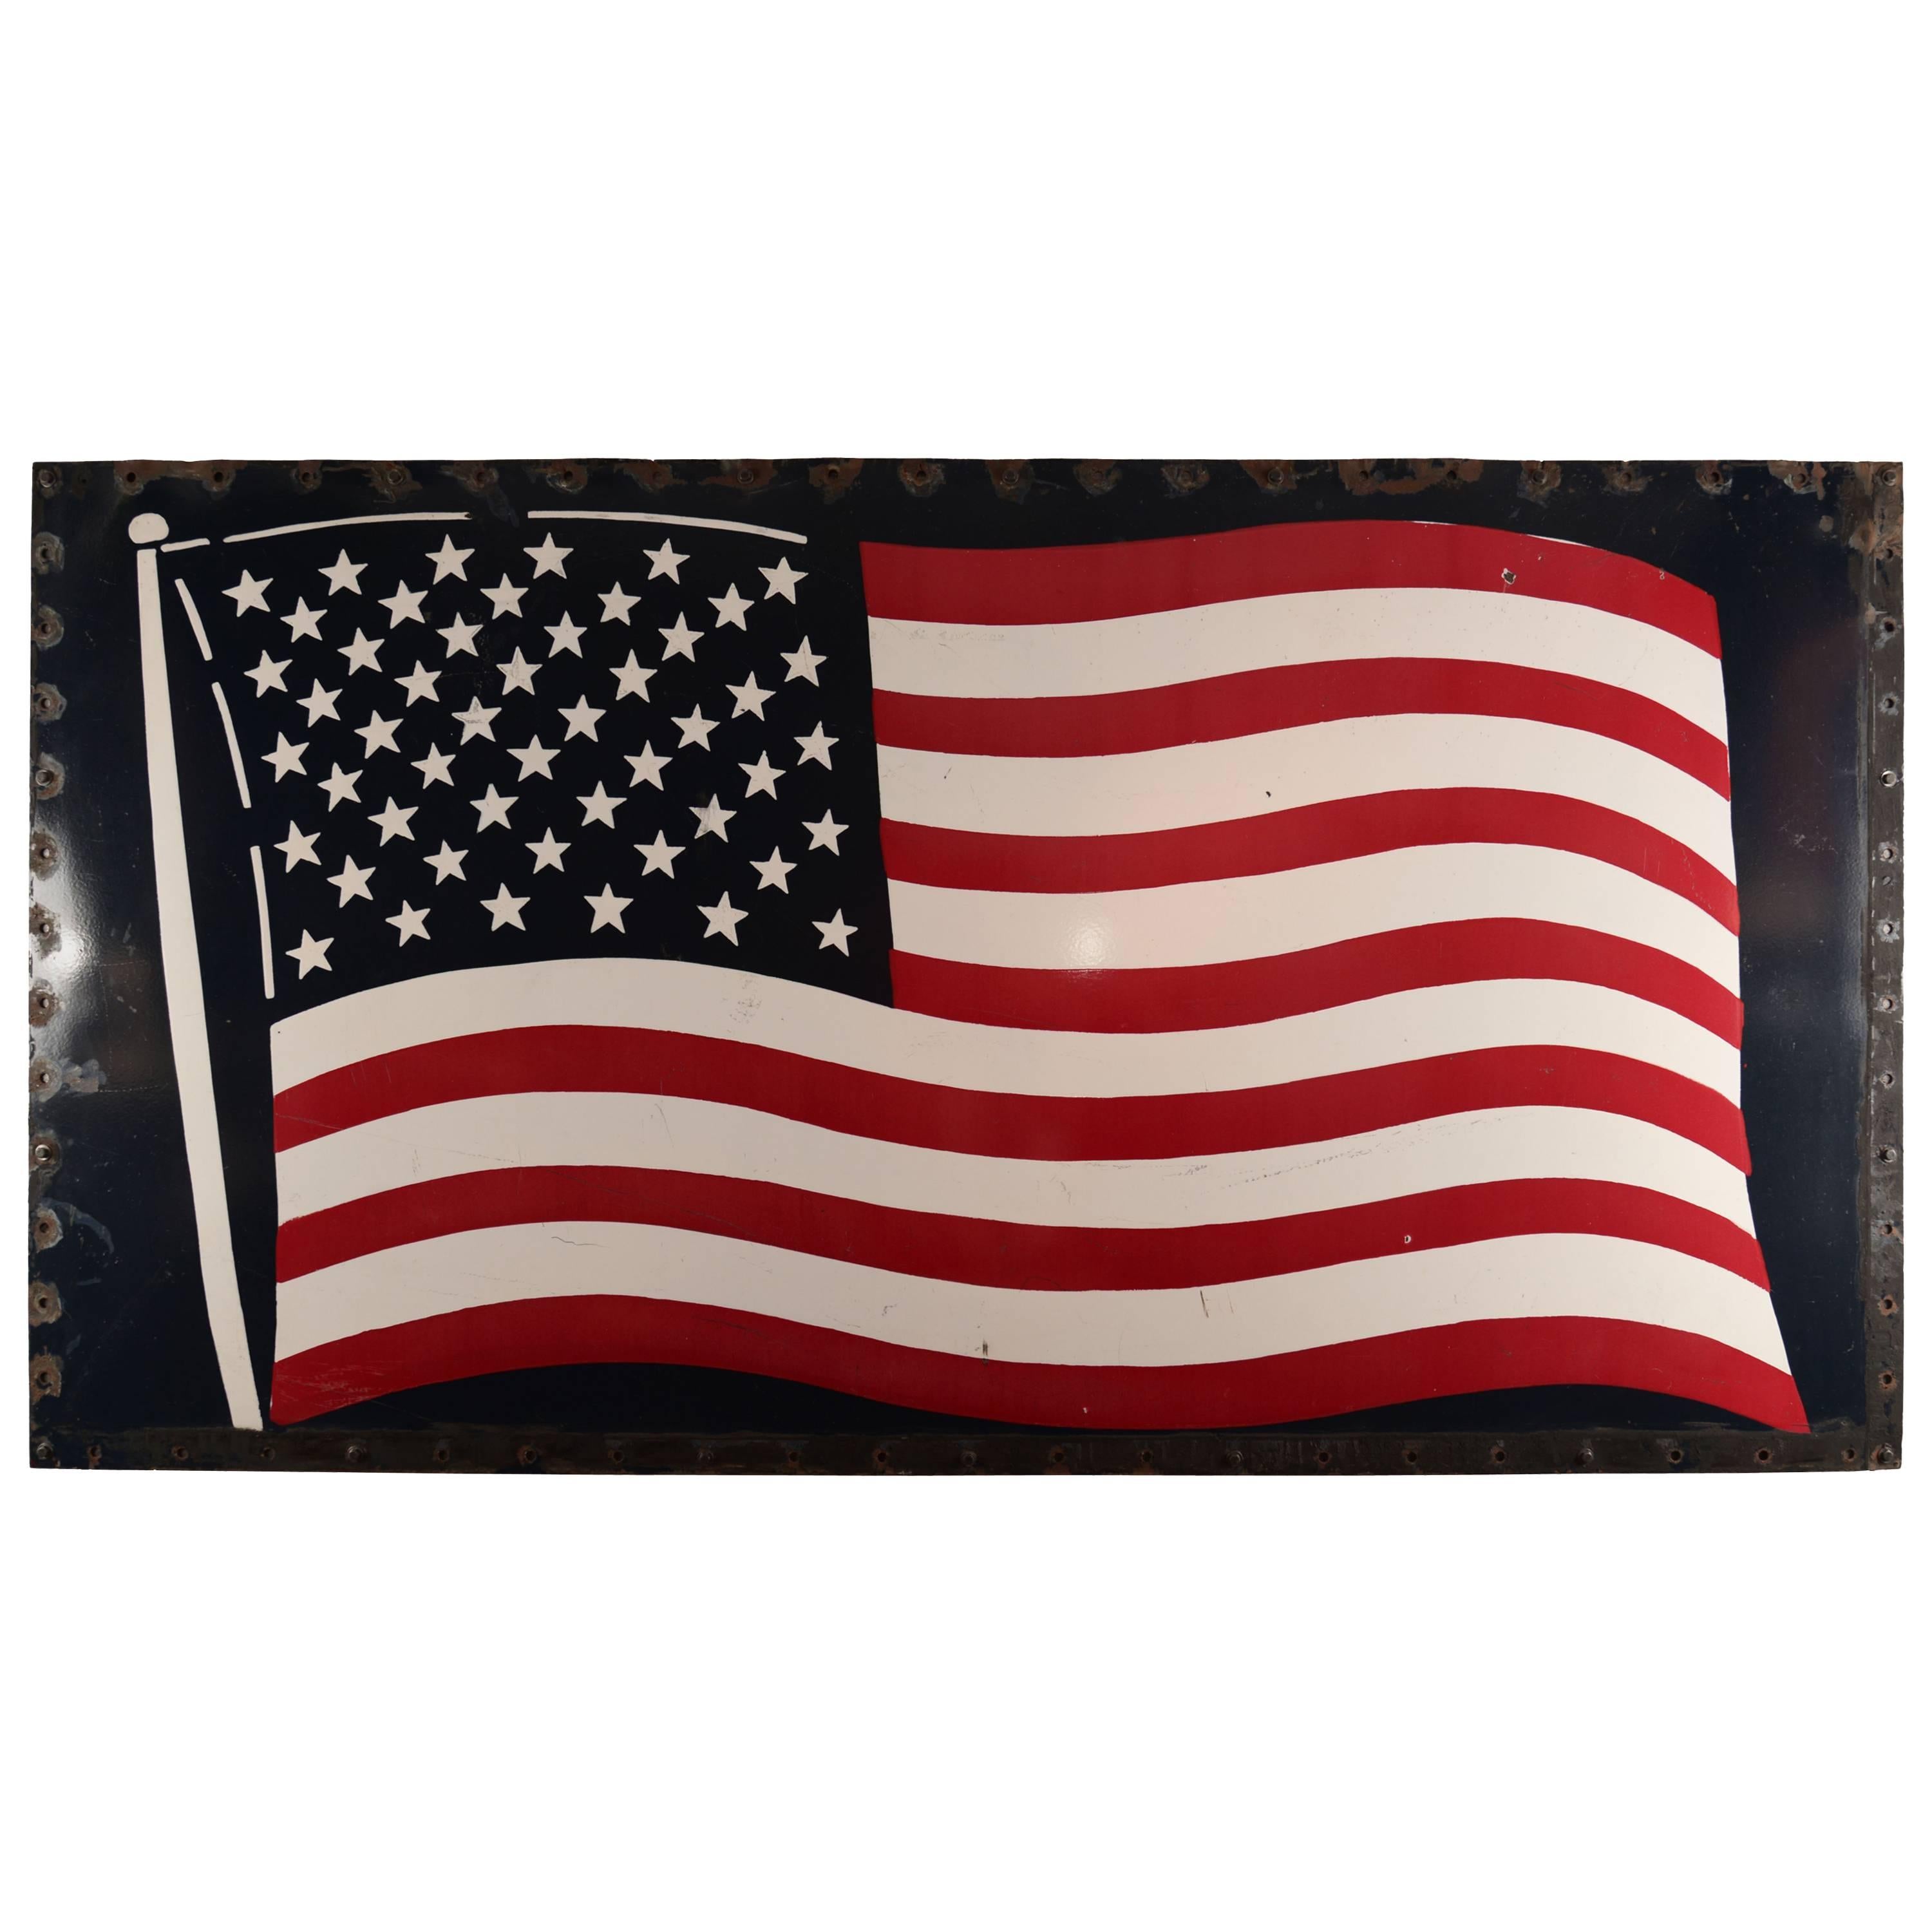 Huge Enamel American Flag For Sale